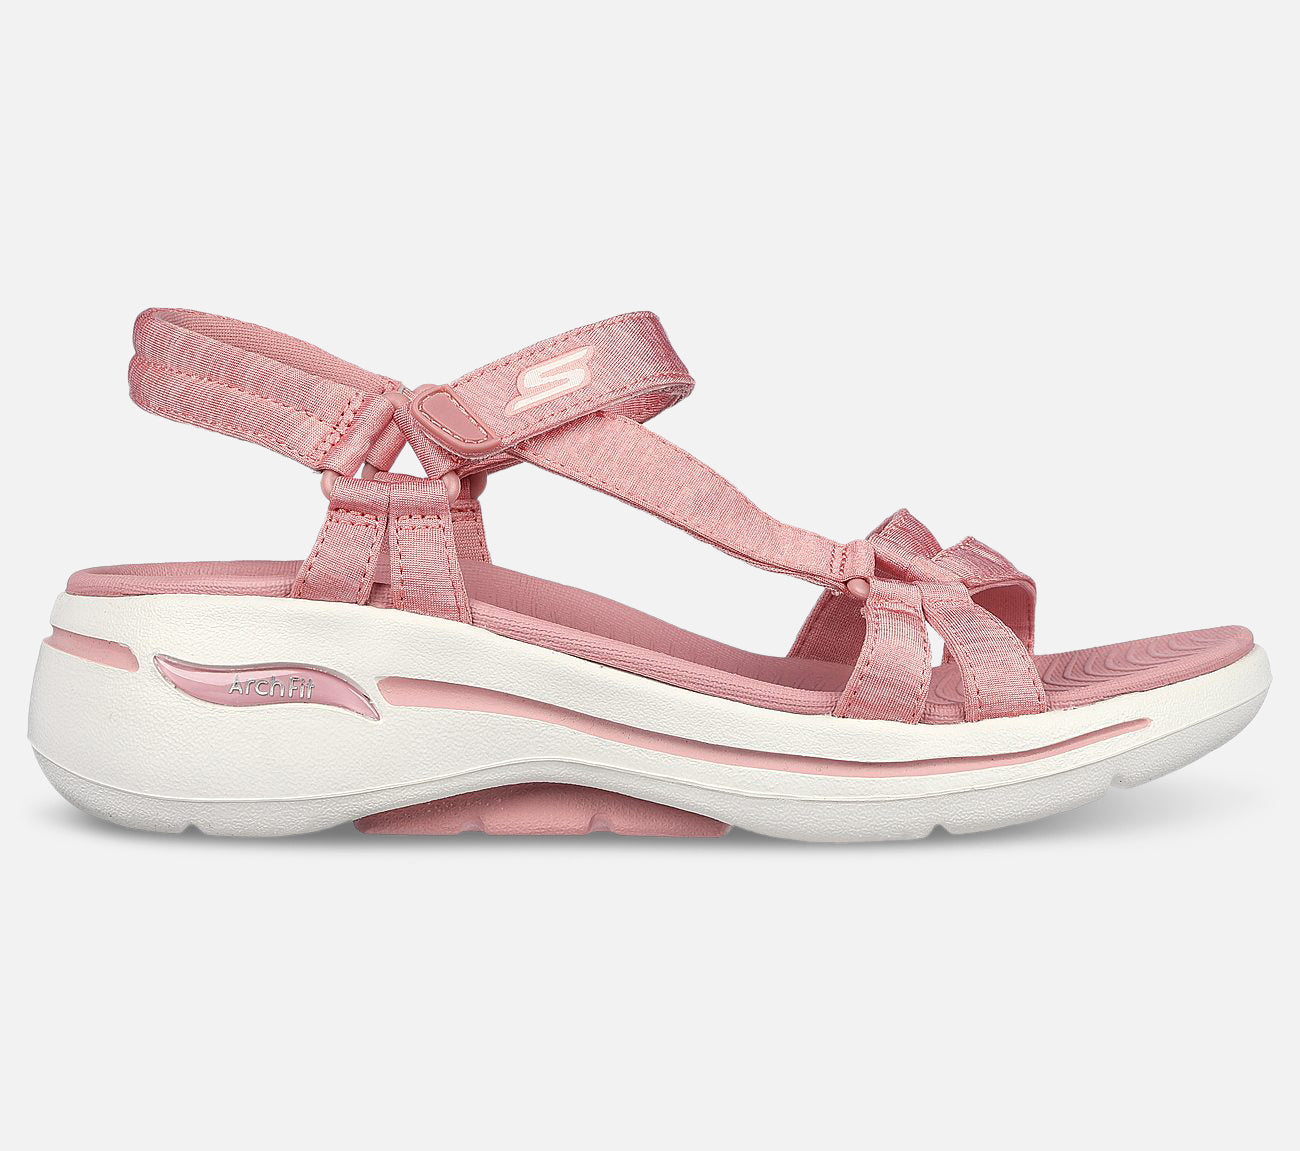 GO WALK Arch Fit - Elite Sandal Sandal Skechers